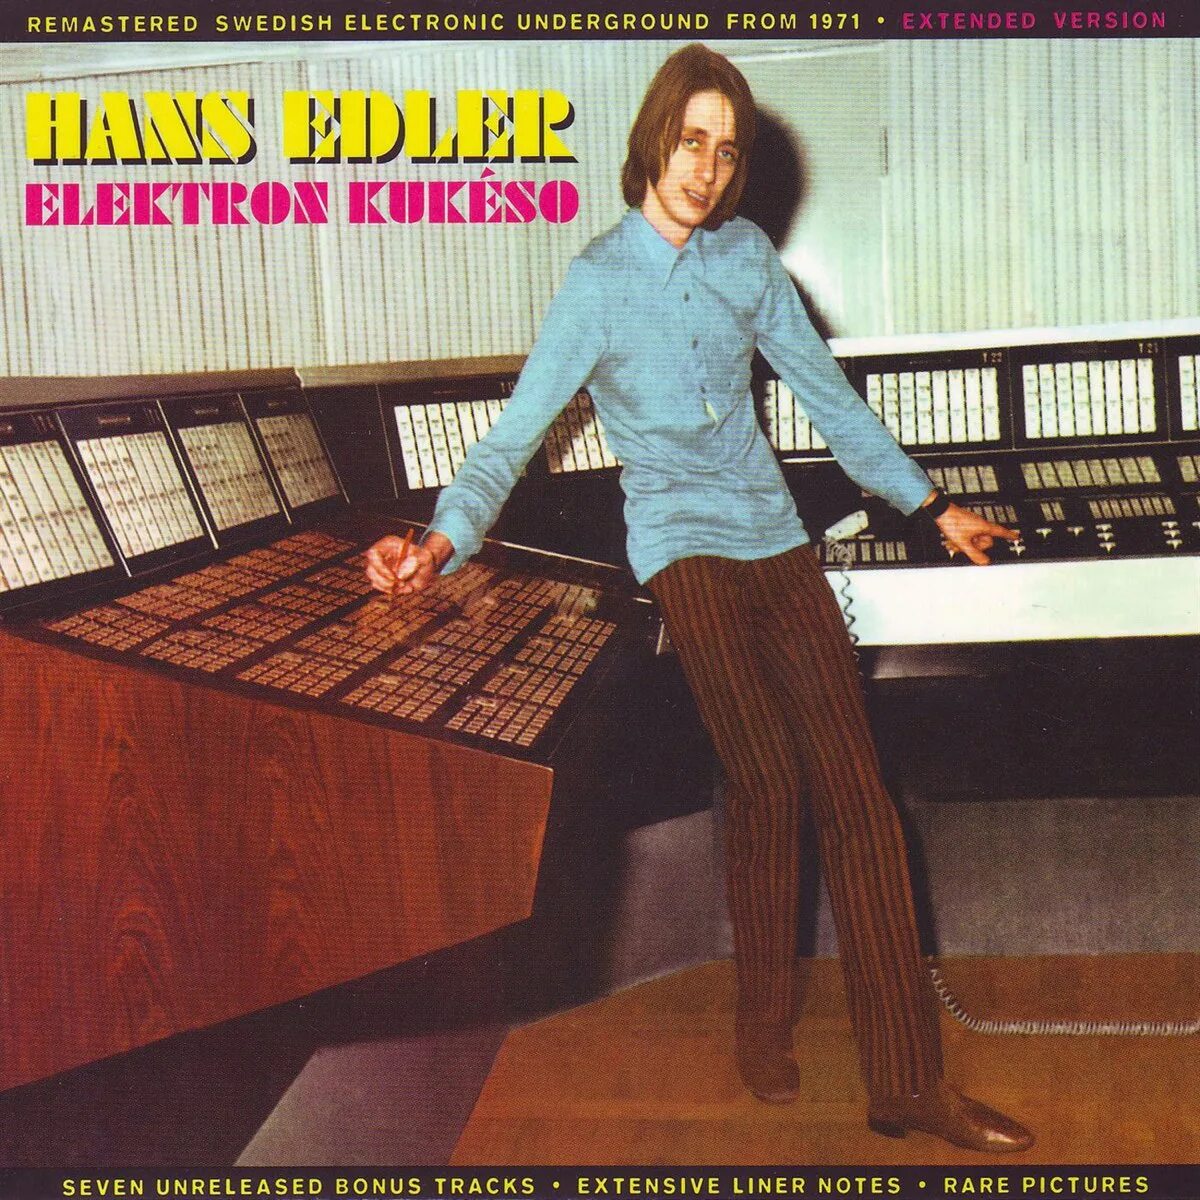 Hans Edler 1979 Space Vision. Песня непривычна